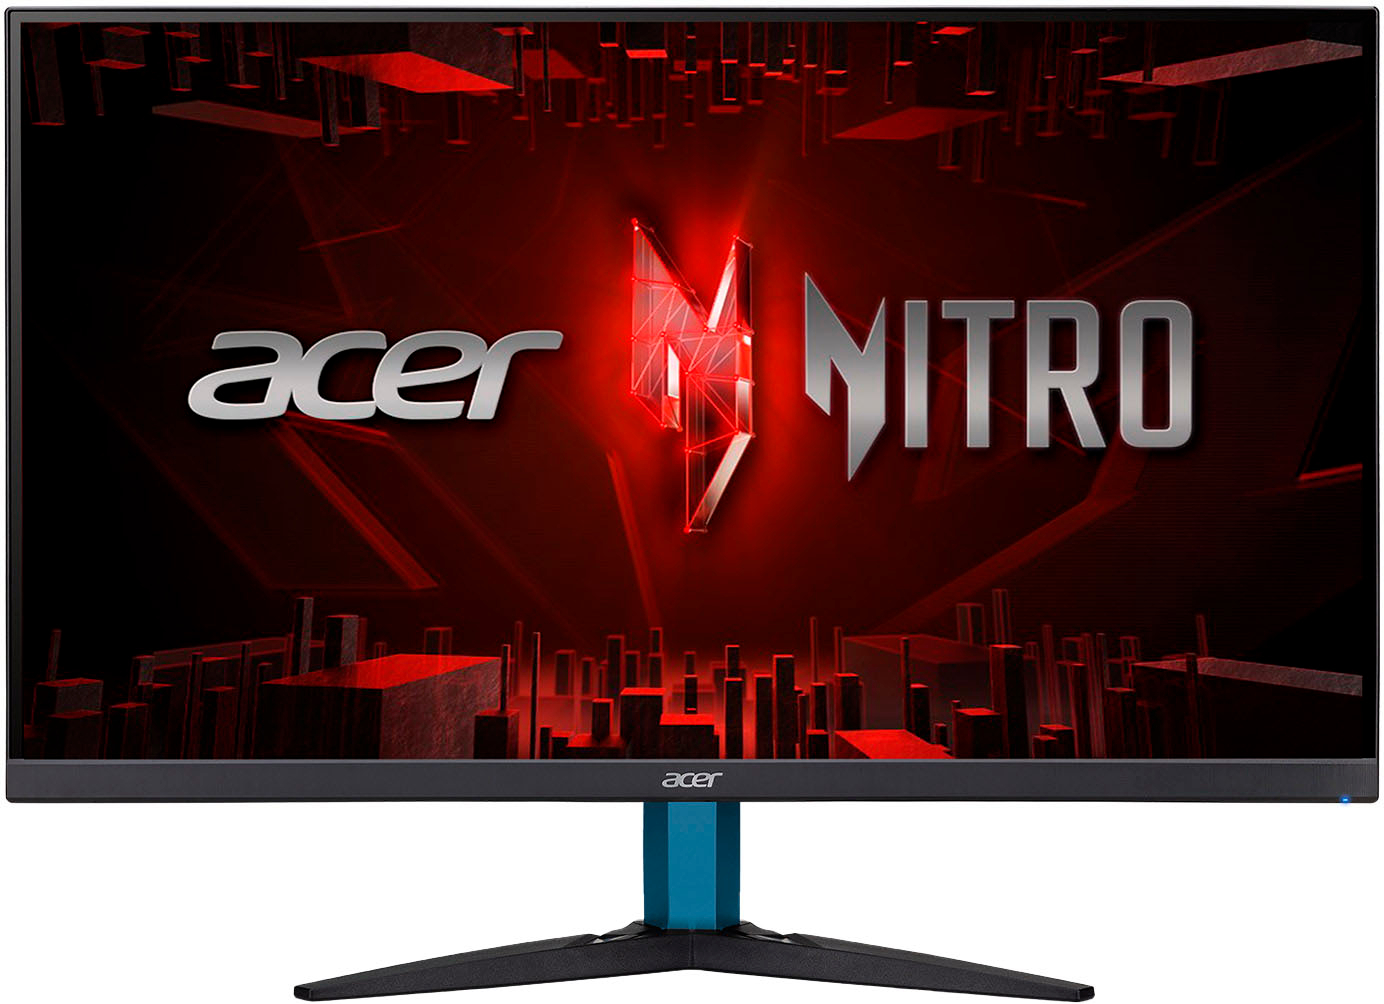 Customer Reviews: Acer Nitro KG272U Pbmiipx 27